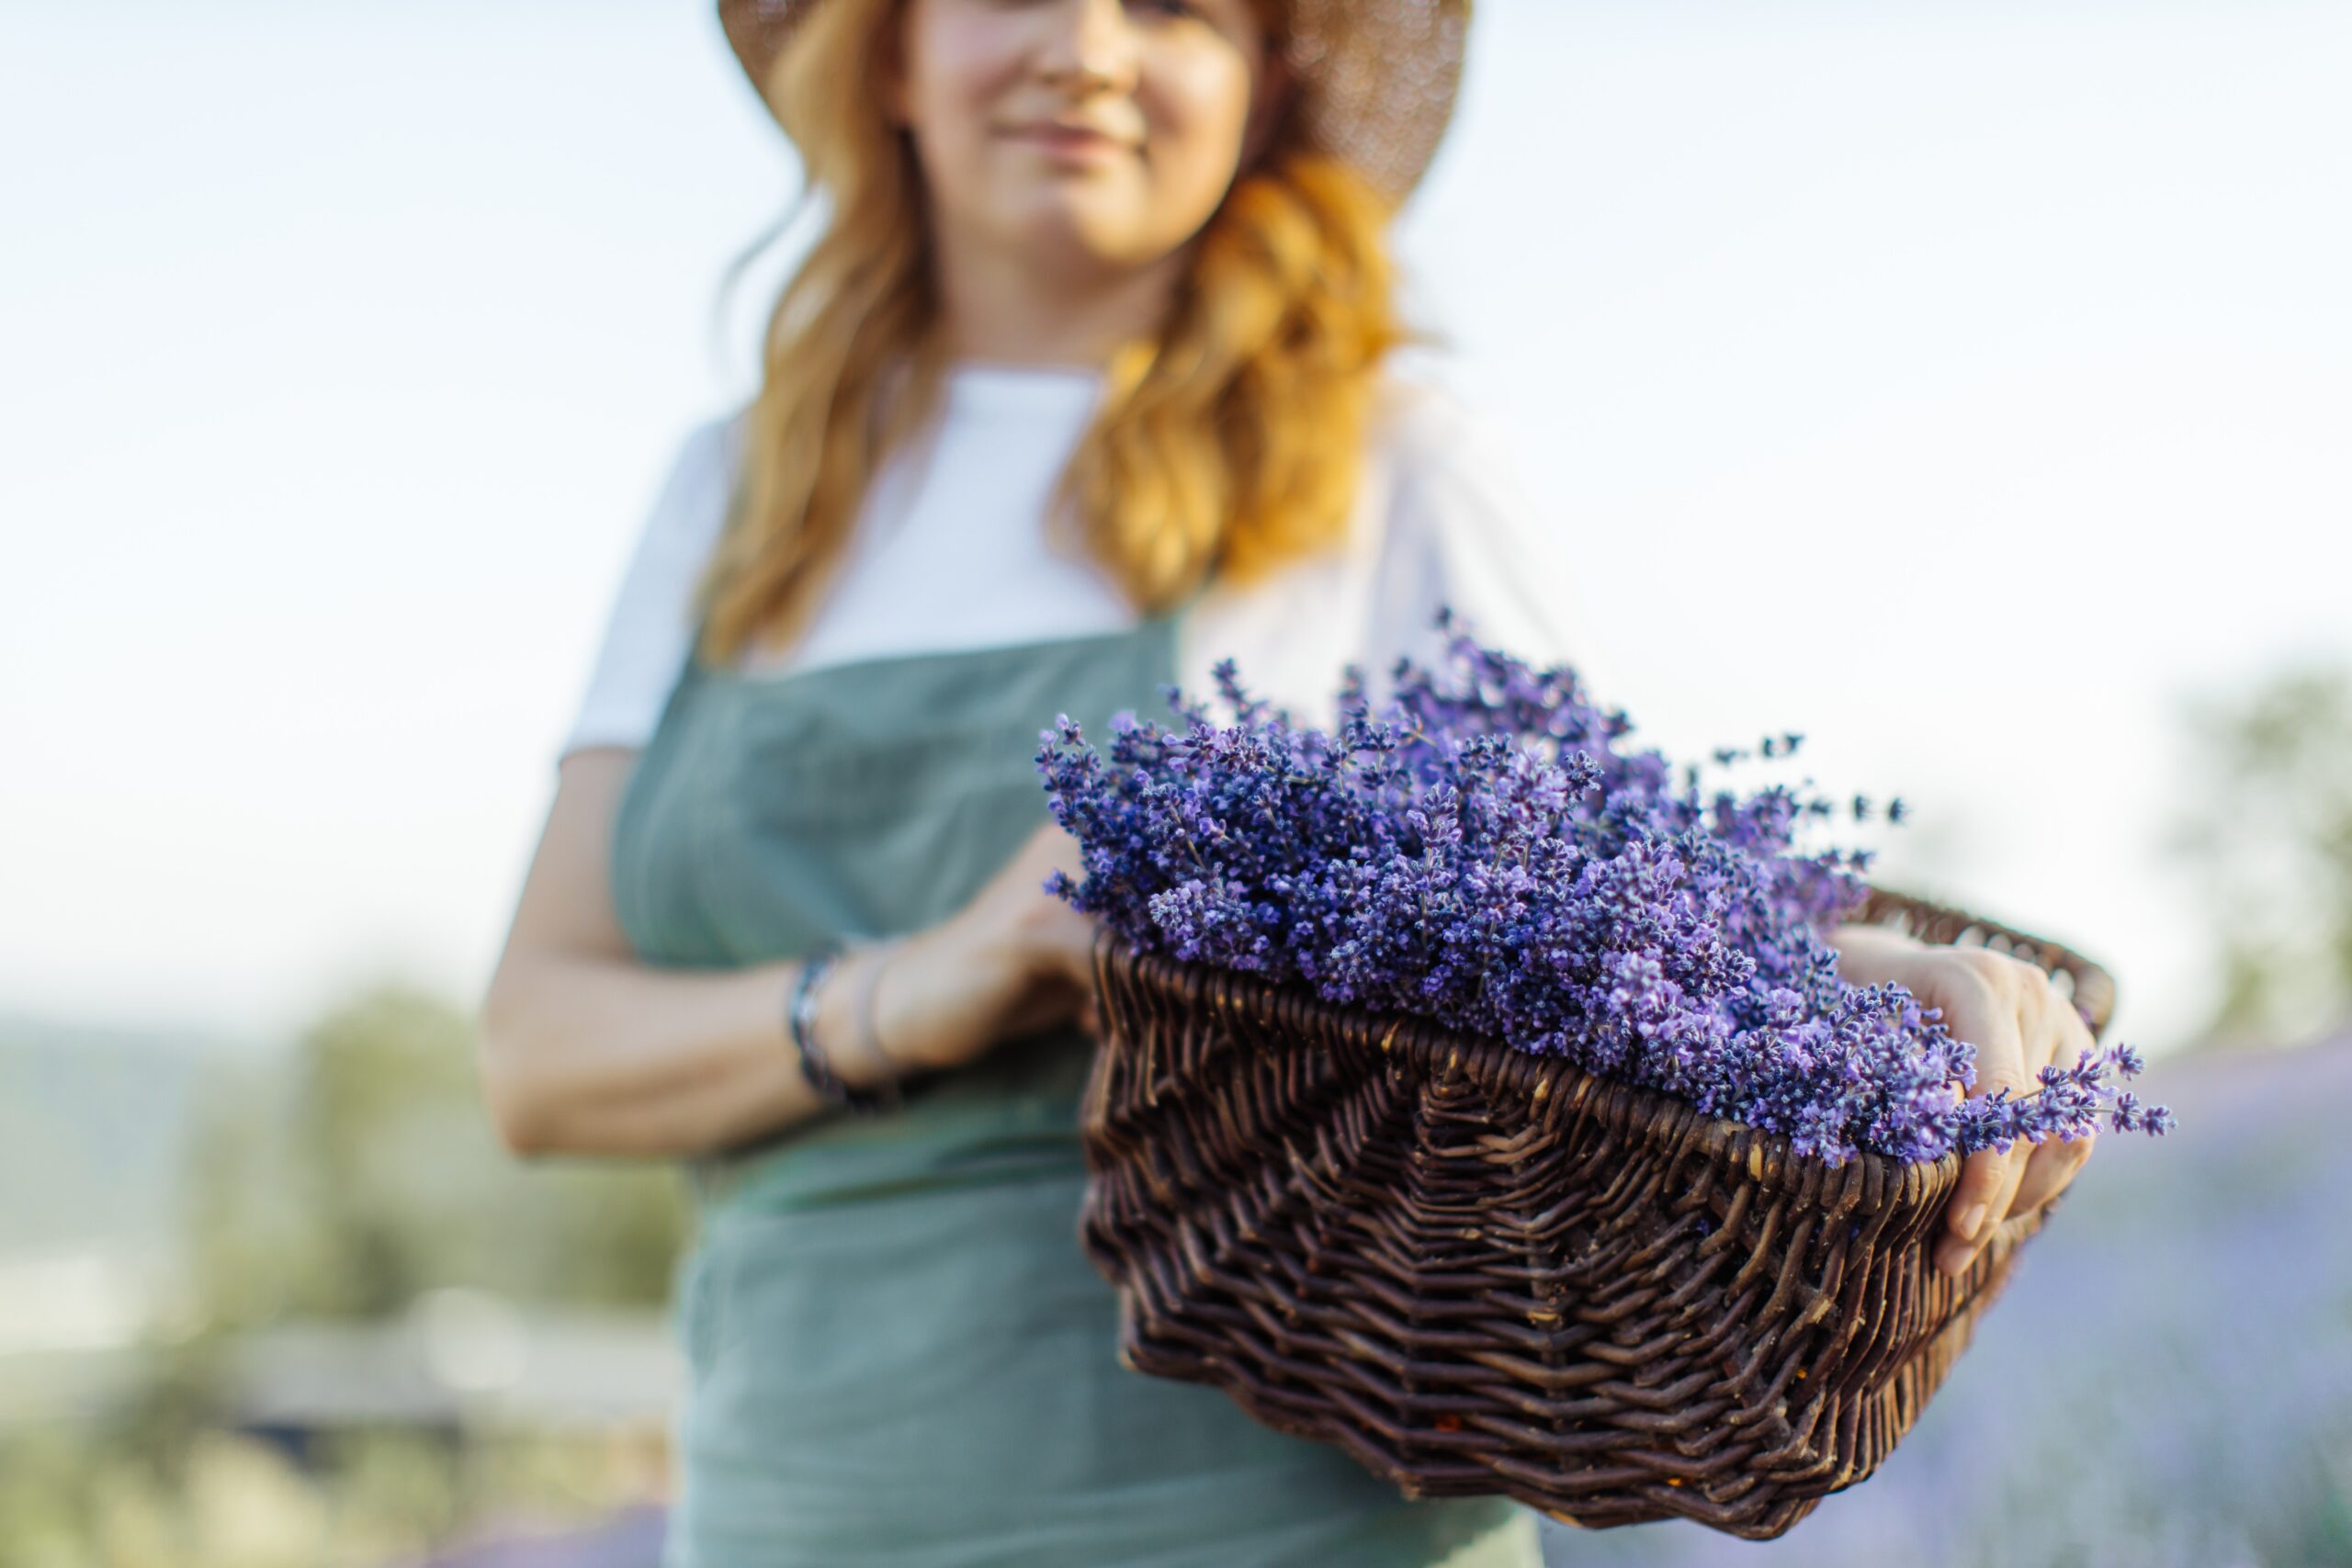 Magical properties of lavender